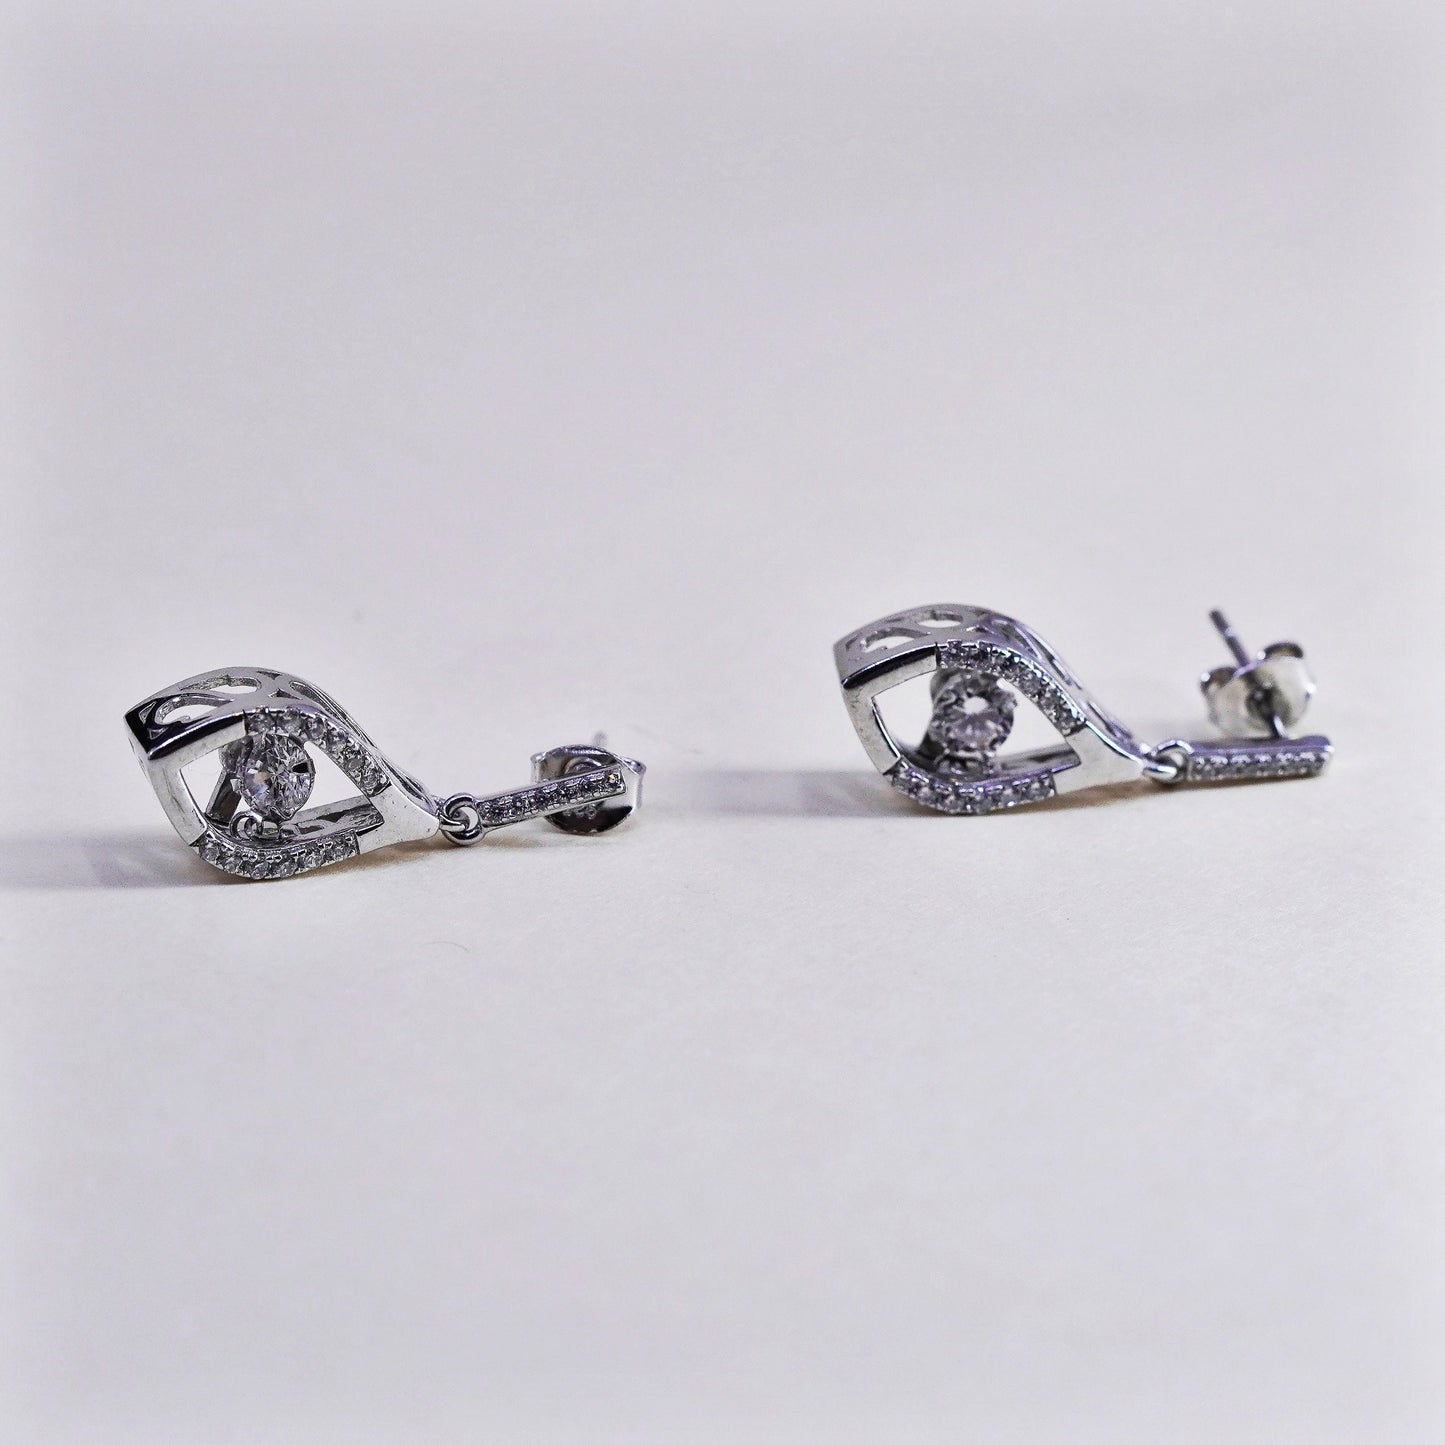 Vintage sterling 925 silver handmade earrings with dancing CZ